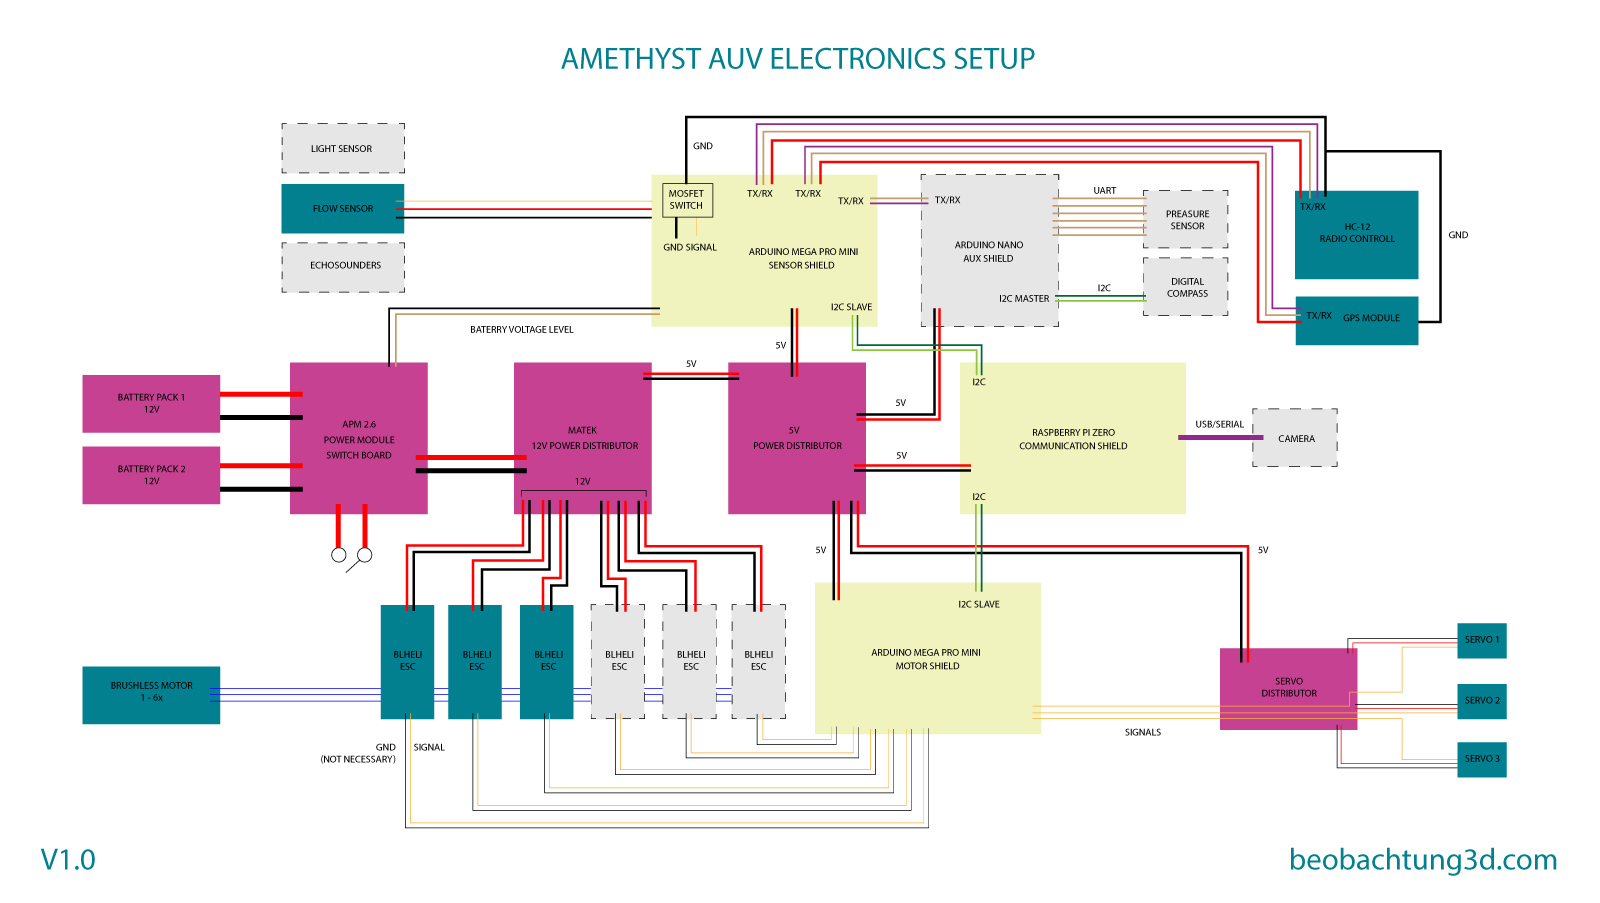 Amethyst AUV Electronic Setup